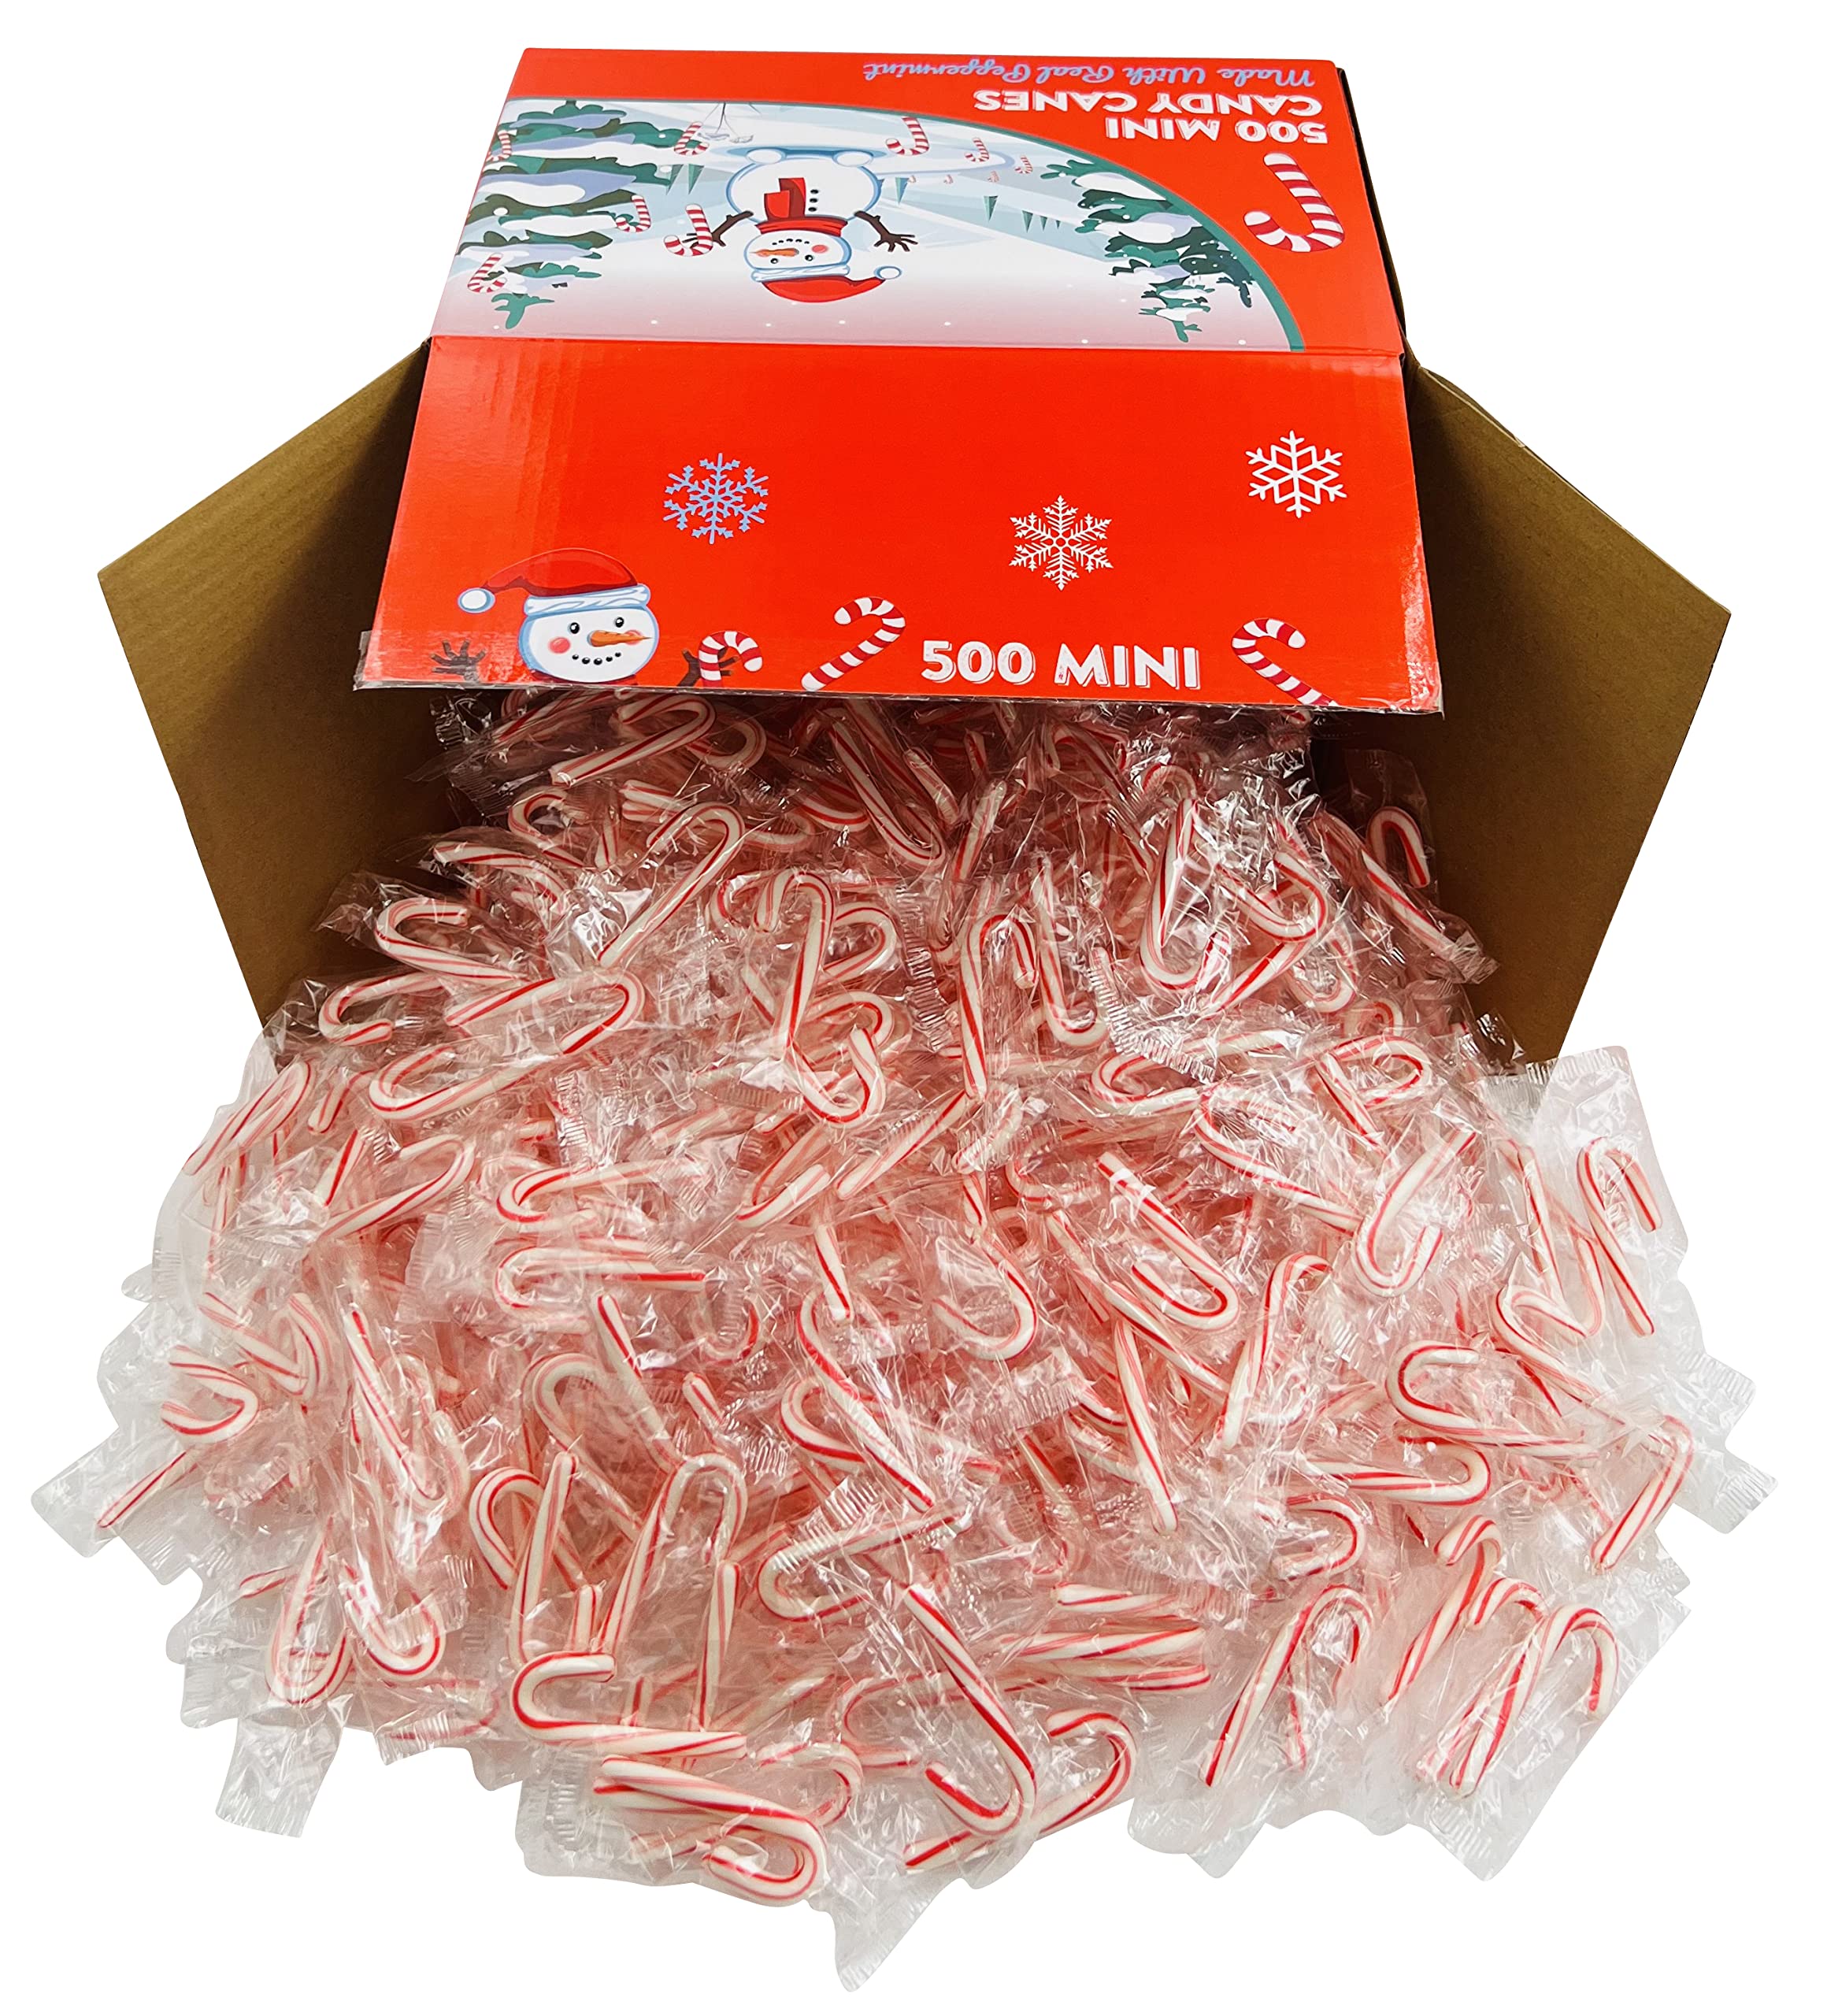 16 oz. Bulk 50 Ct. Christmas Candy Cane Disposable Plastic Cups